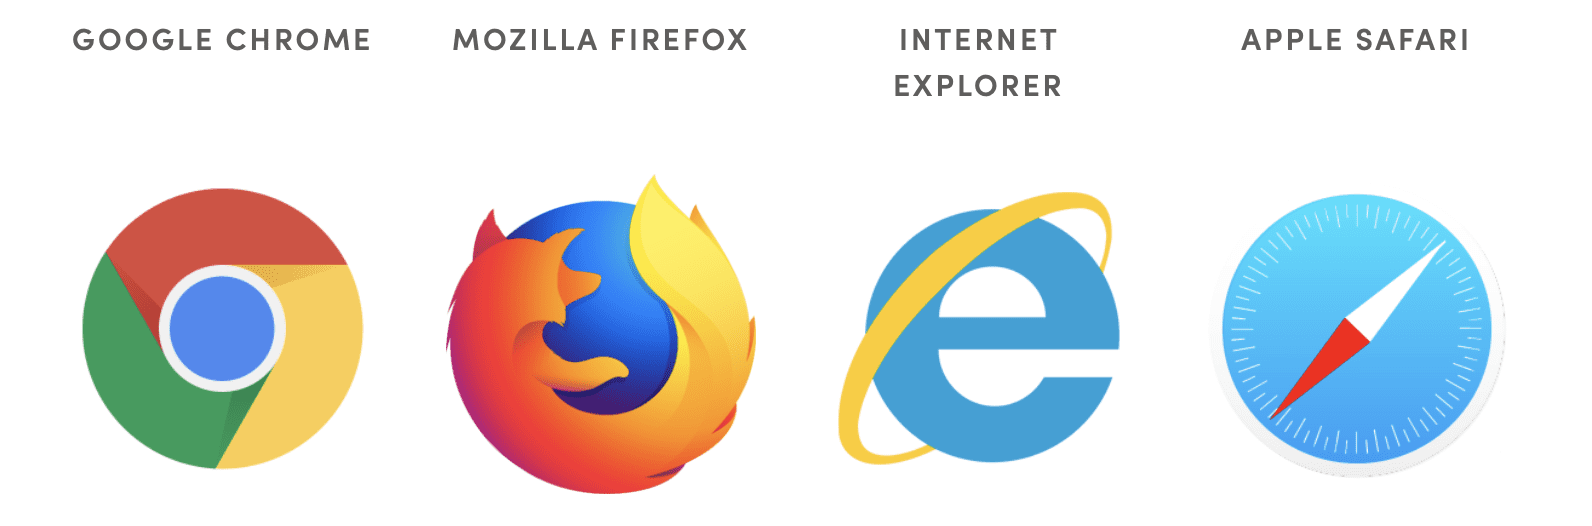 Google Chrome, Mozilla Firefox, Internet Explorer, and Apple Safari logos